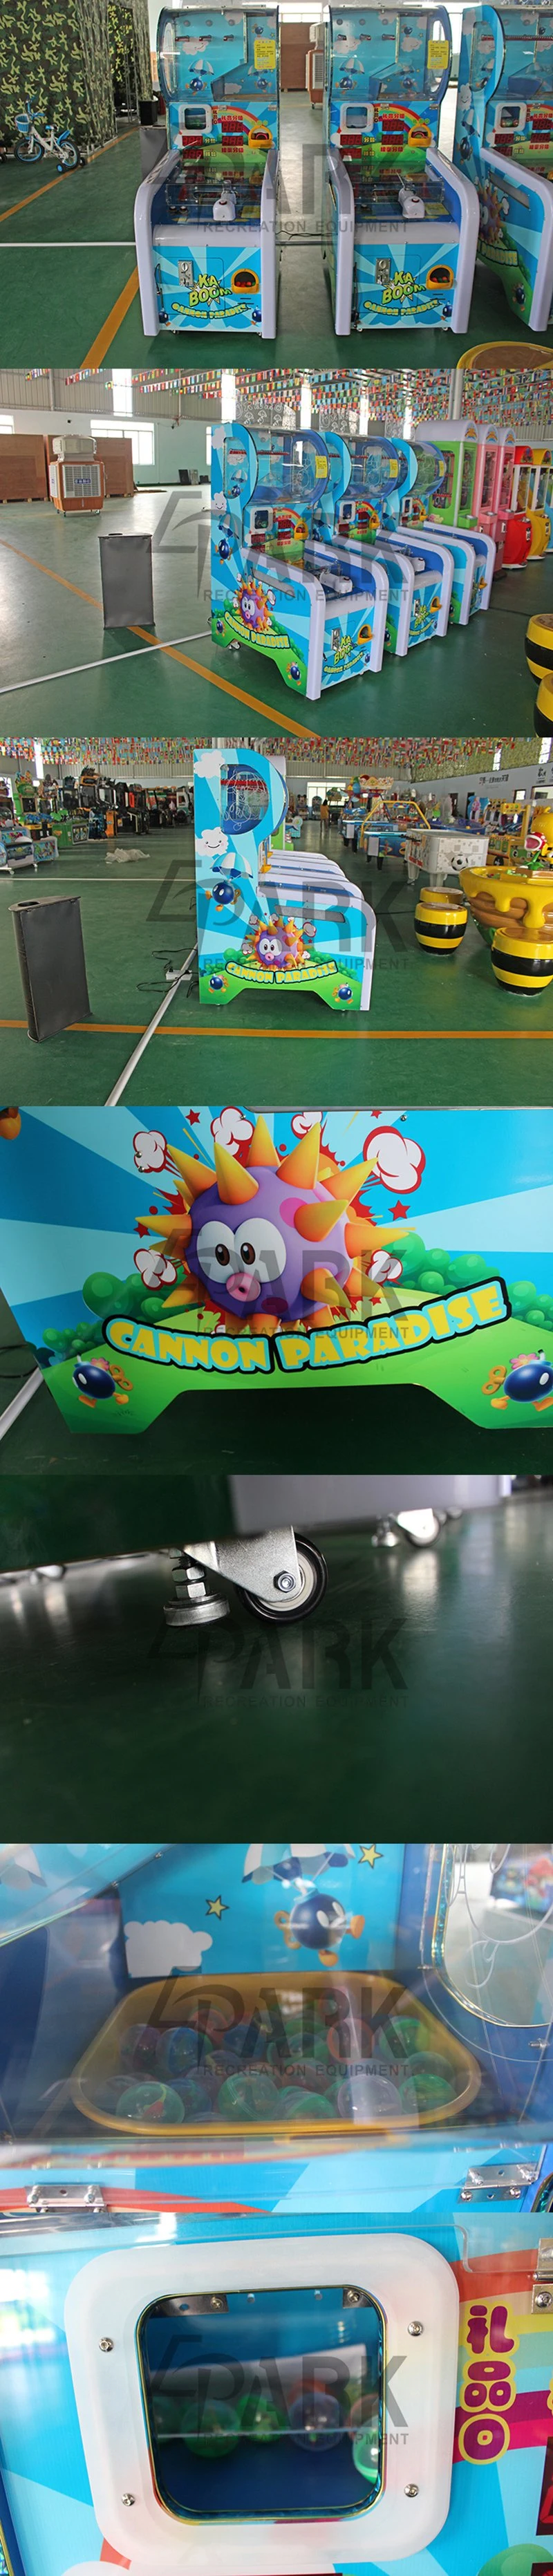 Coin Pusher Kaboom Shooting Arcade Game Machine Shooting Ball Machine for Children